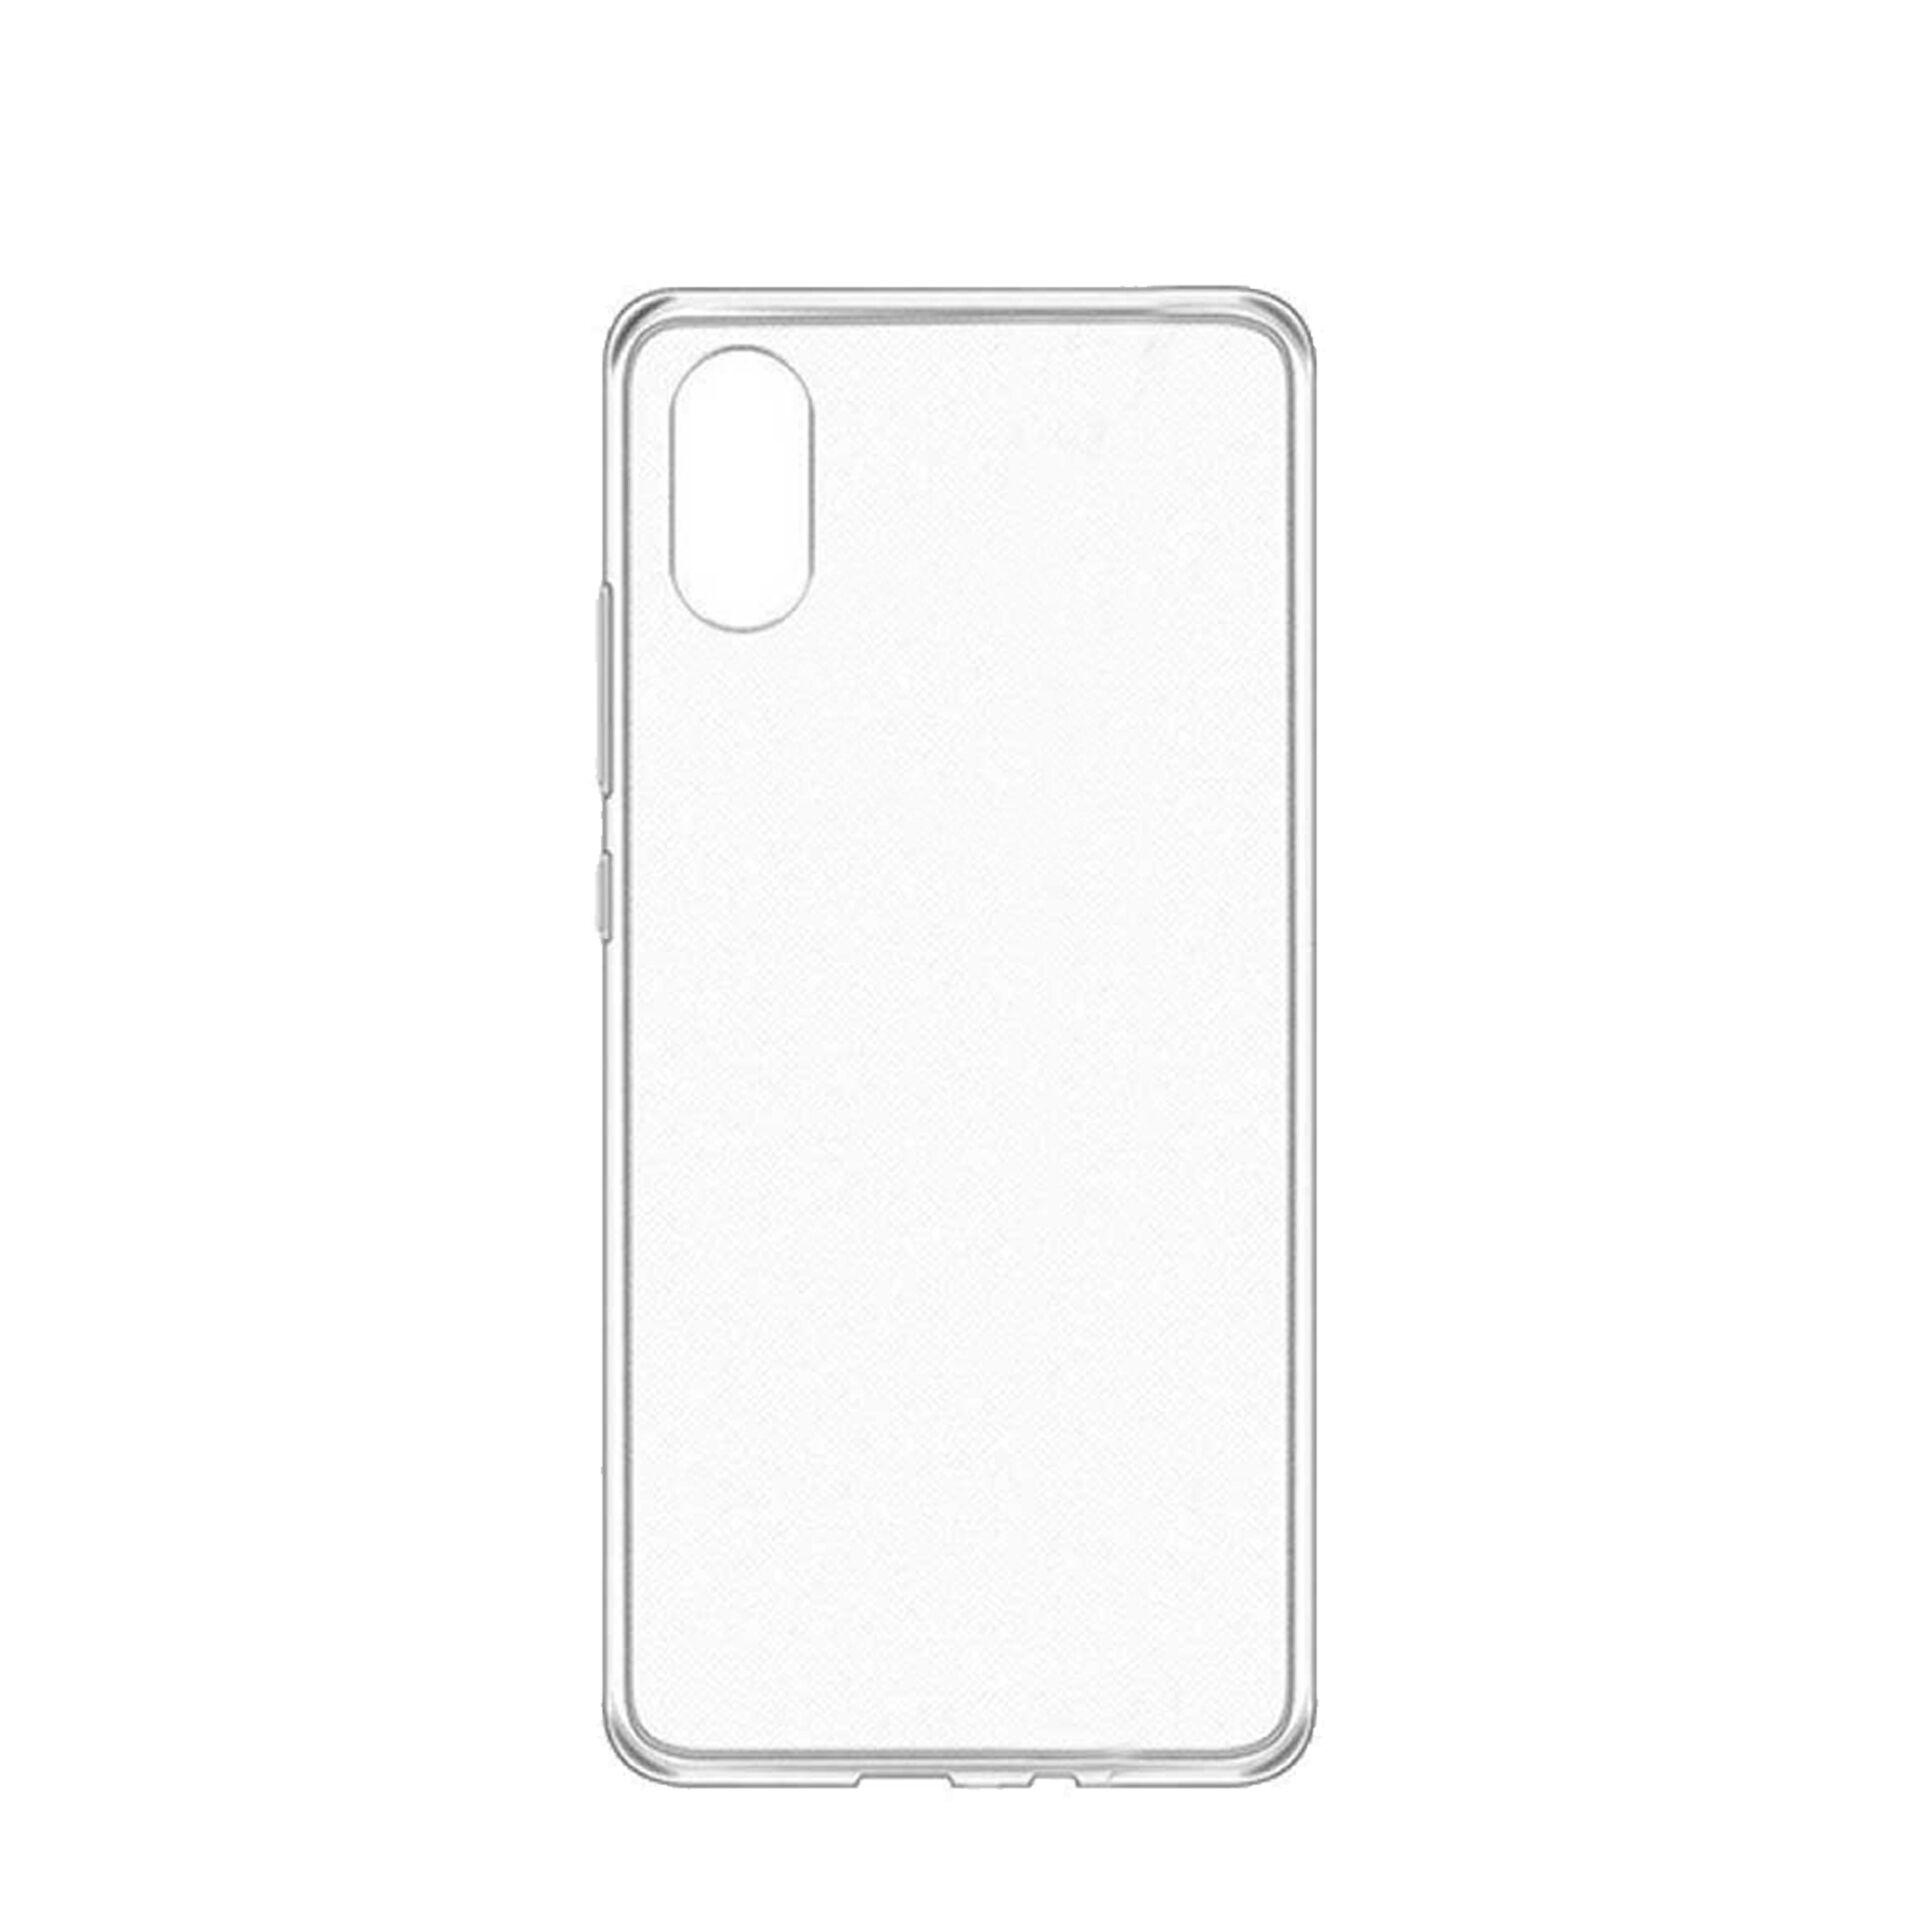 Open Box Mobile Capa silicone Transparente iPhone 5s